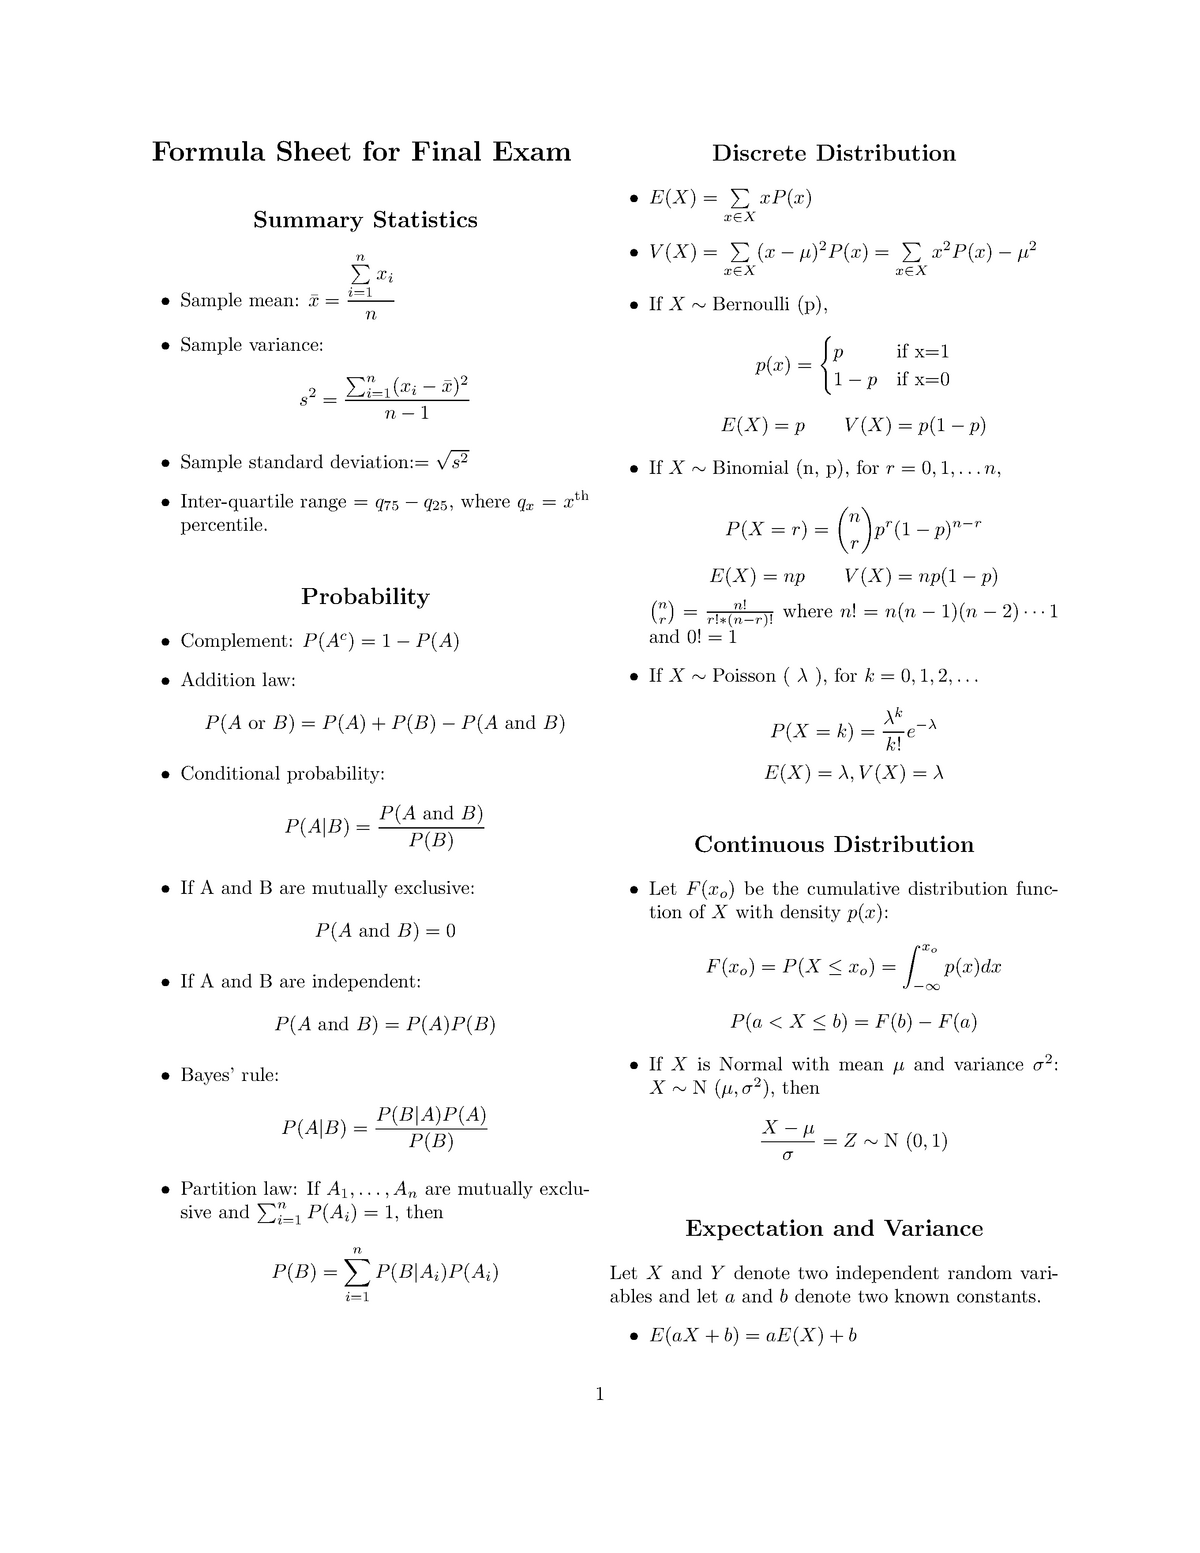 final-formula-sheet-duke-formula-sheet-for-final-exam-summary